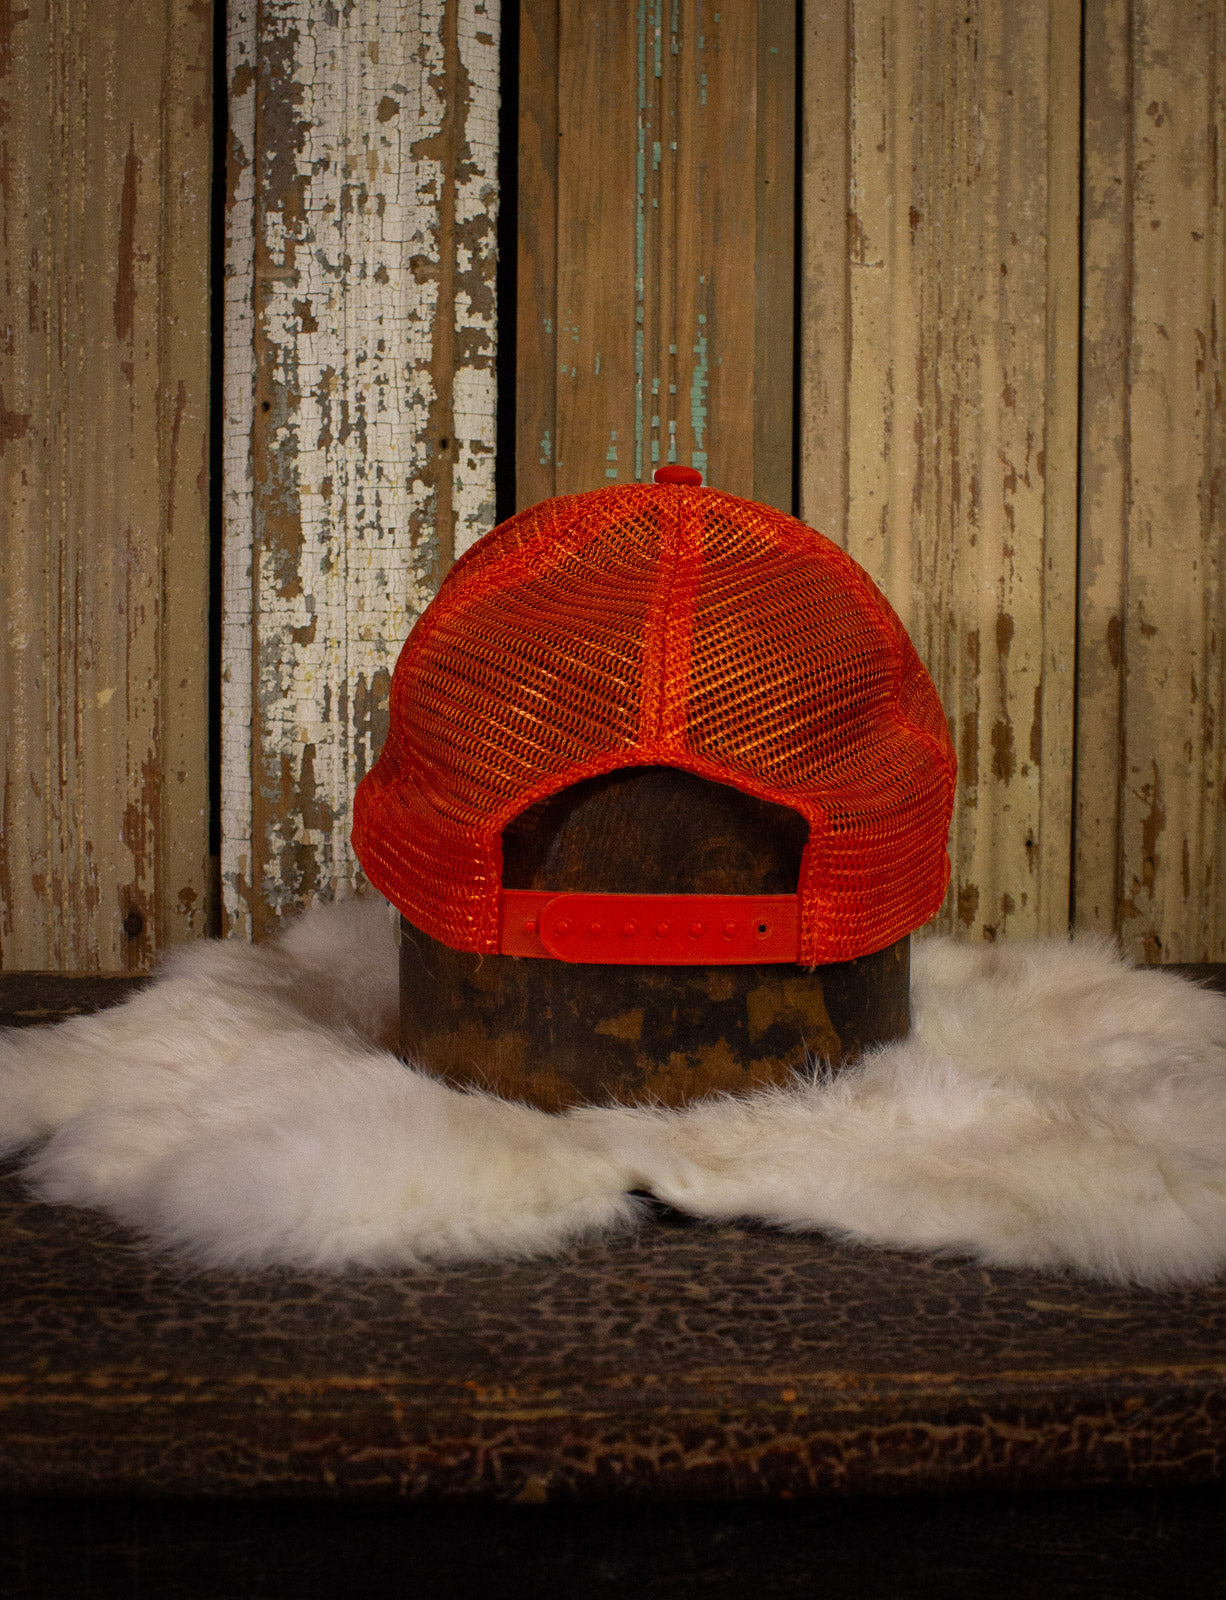 Vintage Ohatchee, Alaska "Not A Hell of A Lot" Trucker Hat Orange/White